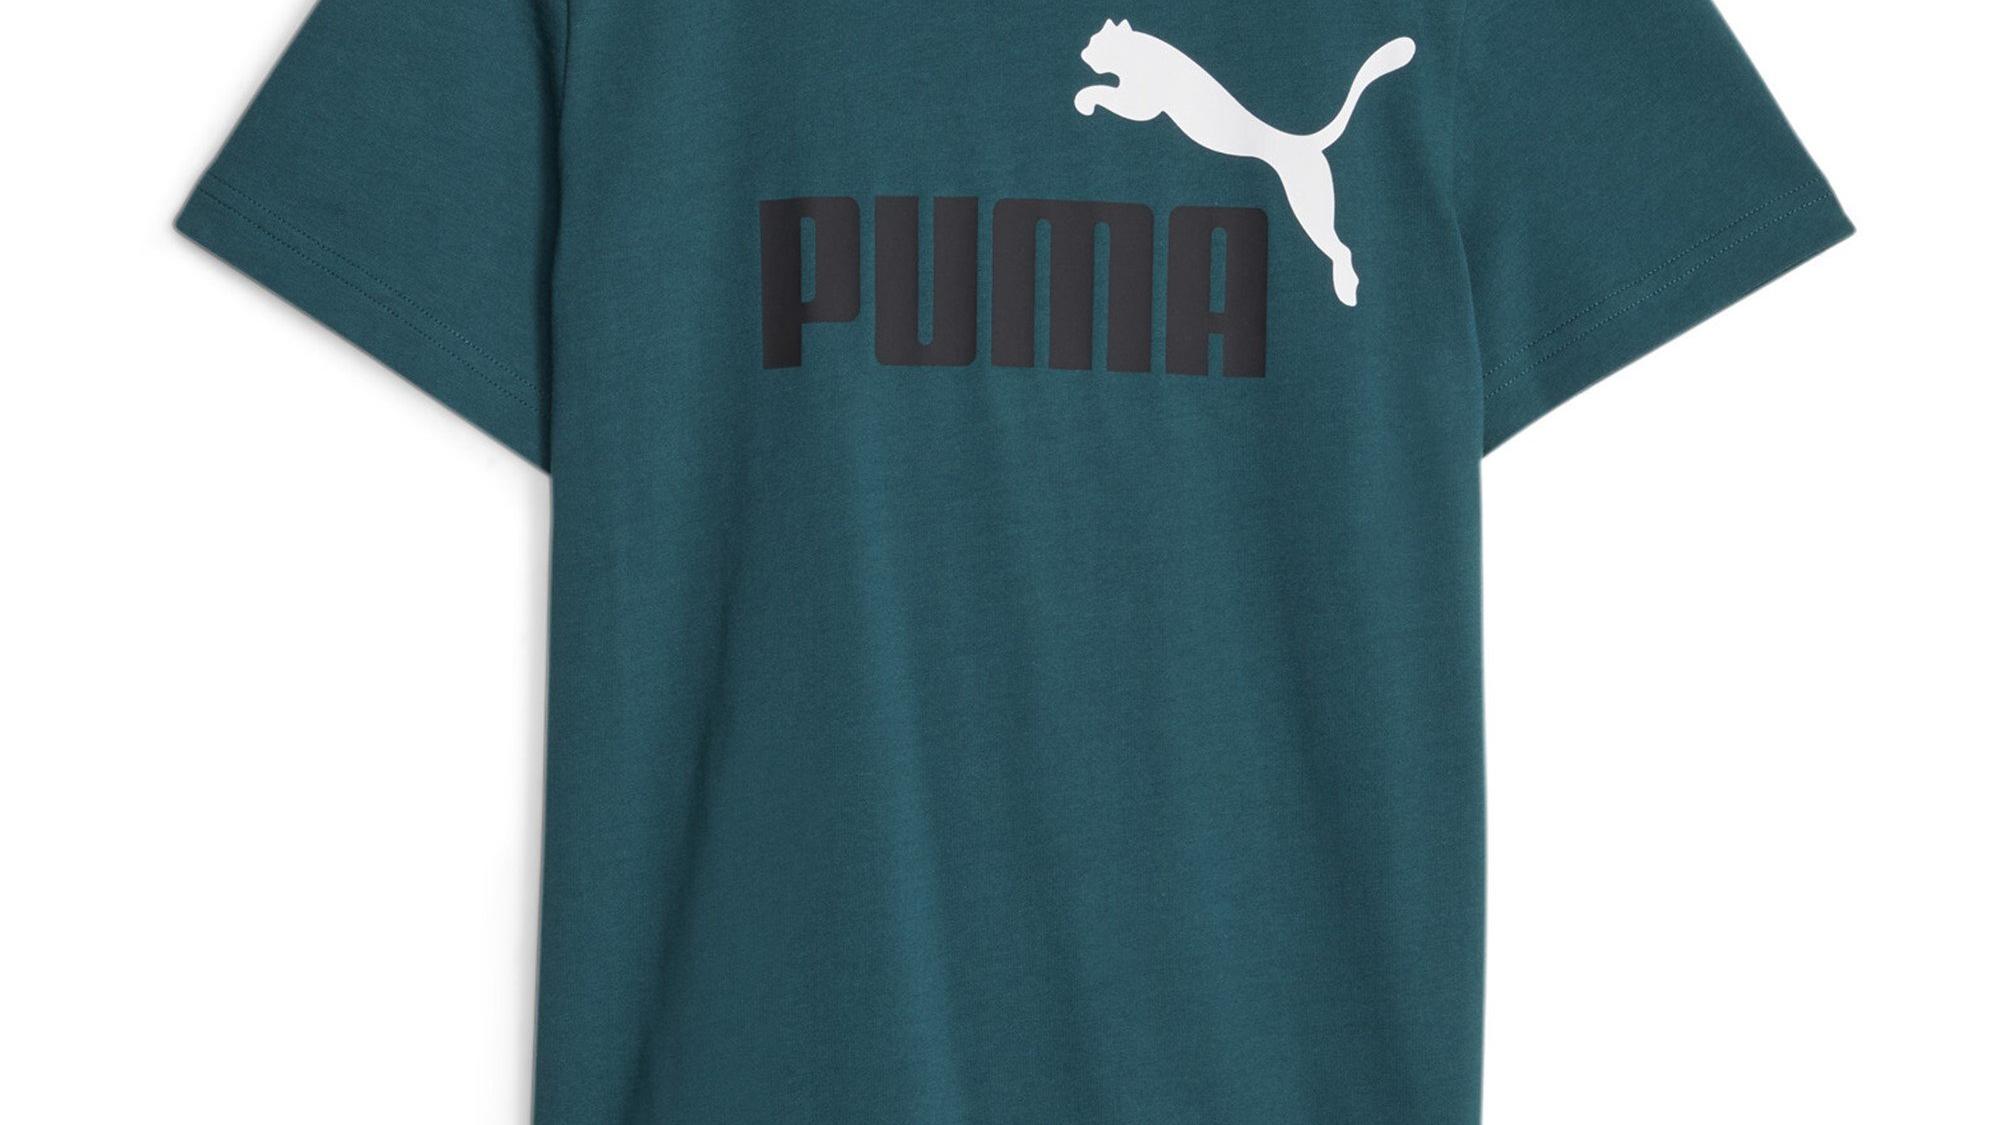 Puma Brand KIDS Girl's PUMA Logo Short Sleeve Crew Neck Sport T-Shirt